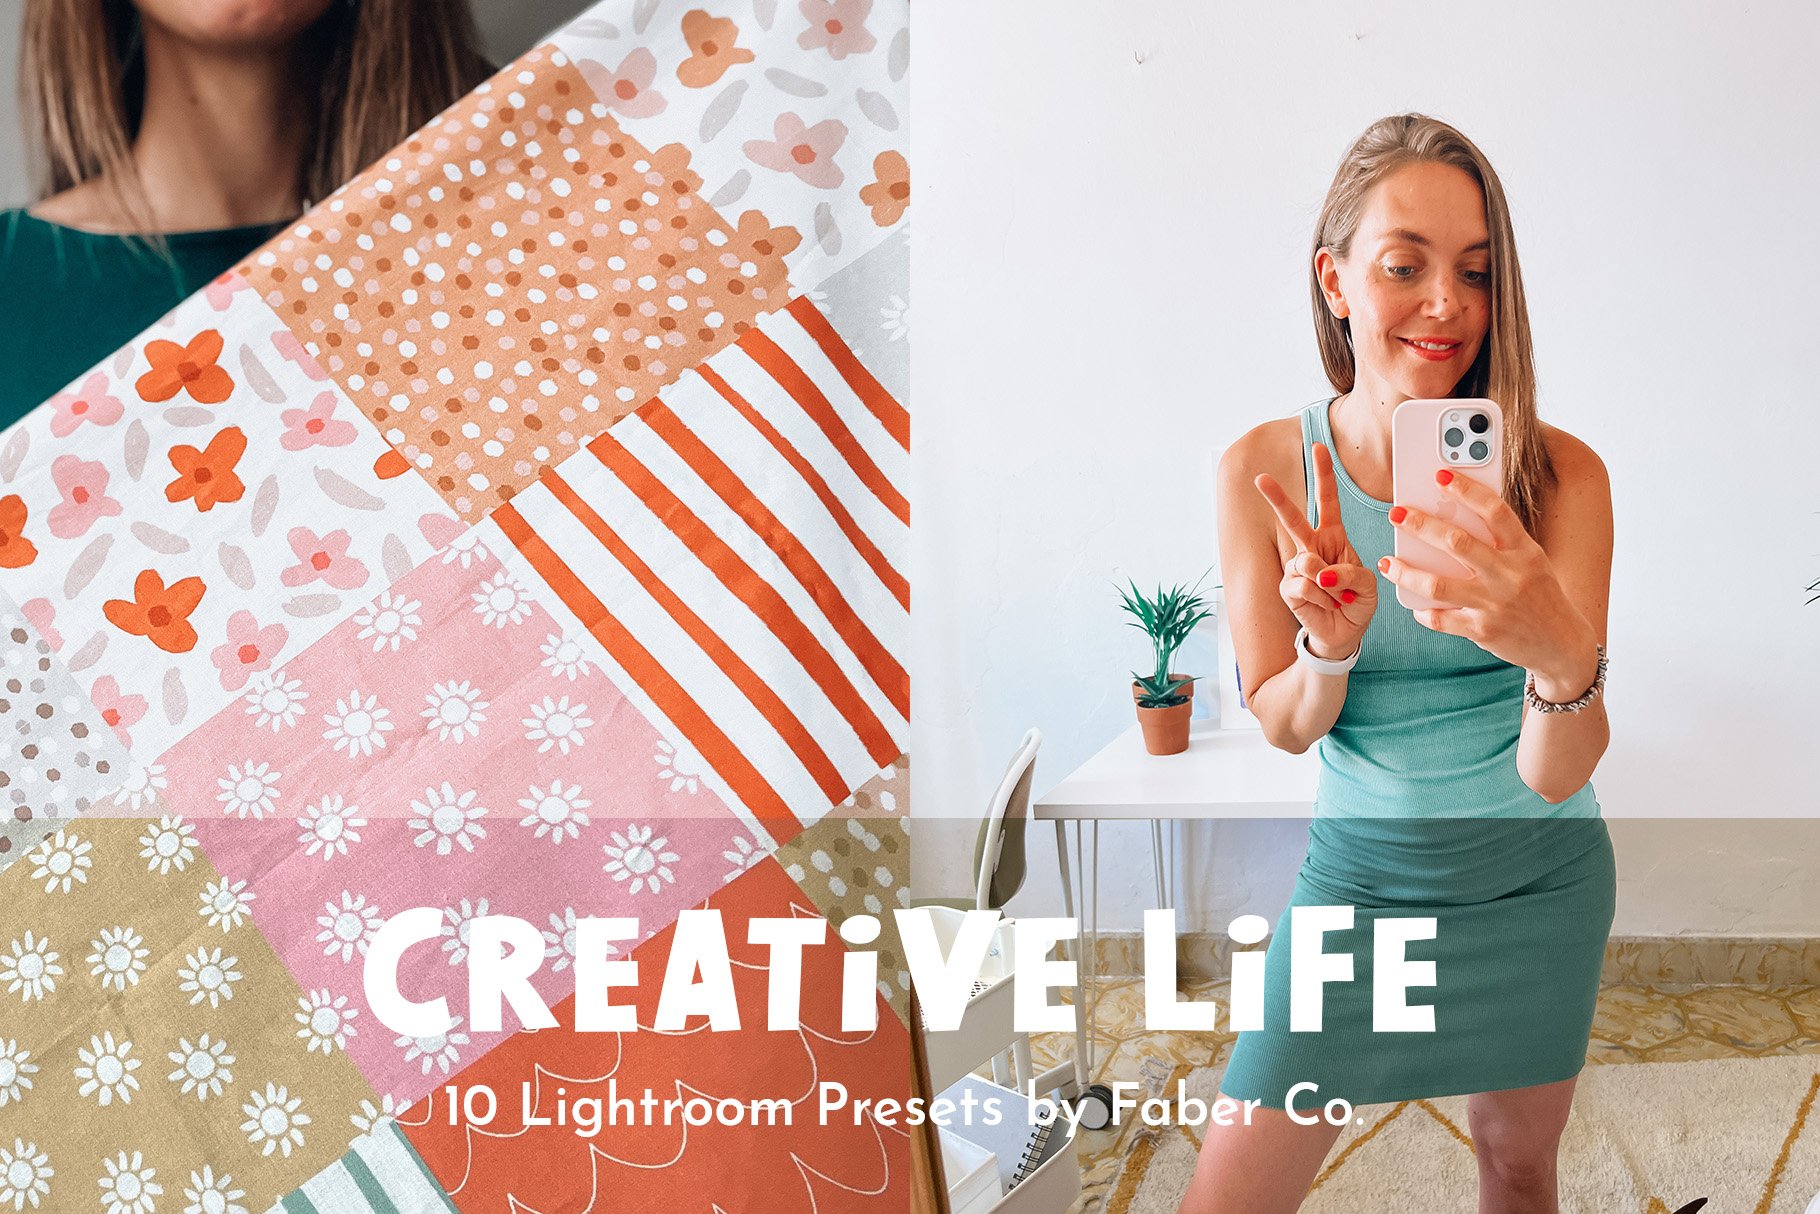 Creative Life - Lightroom Presetscover image.